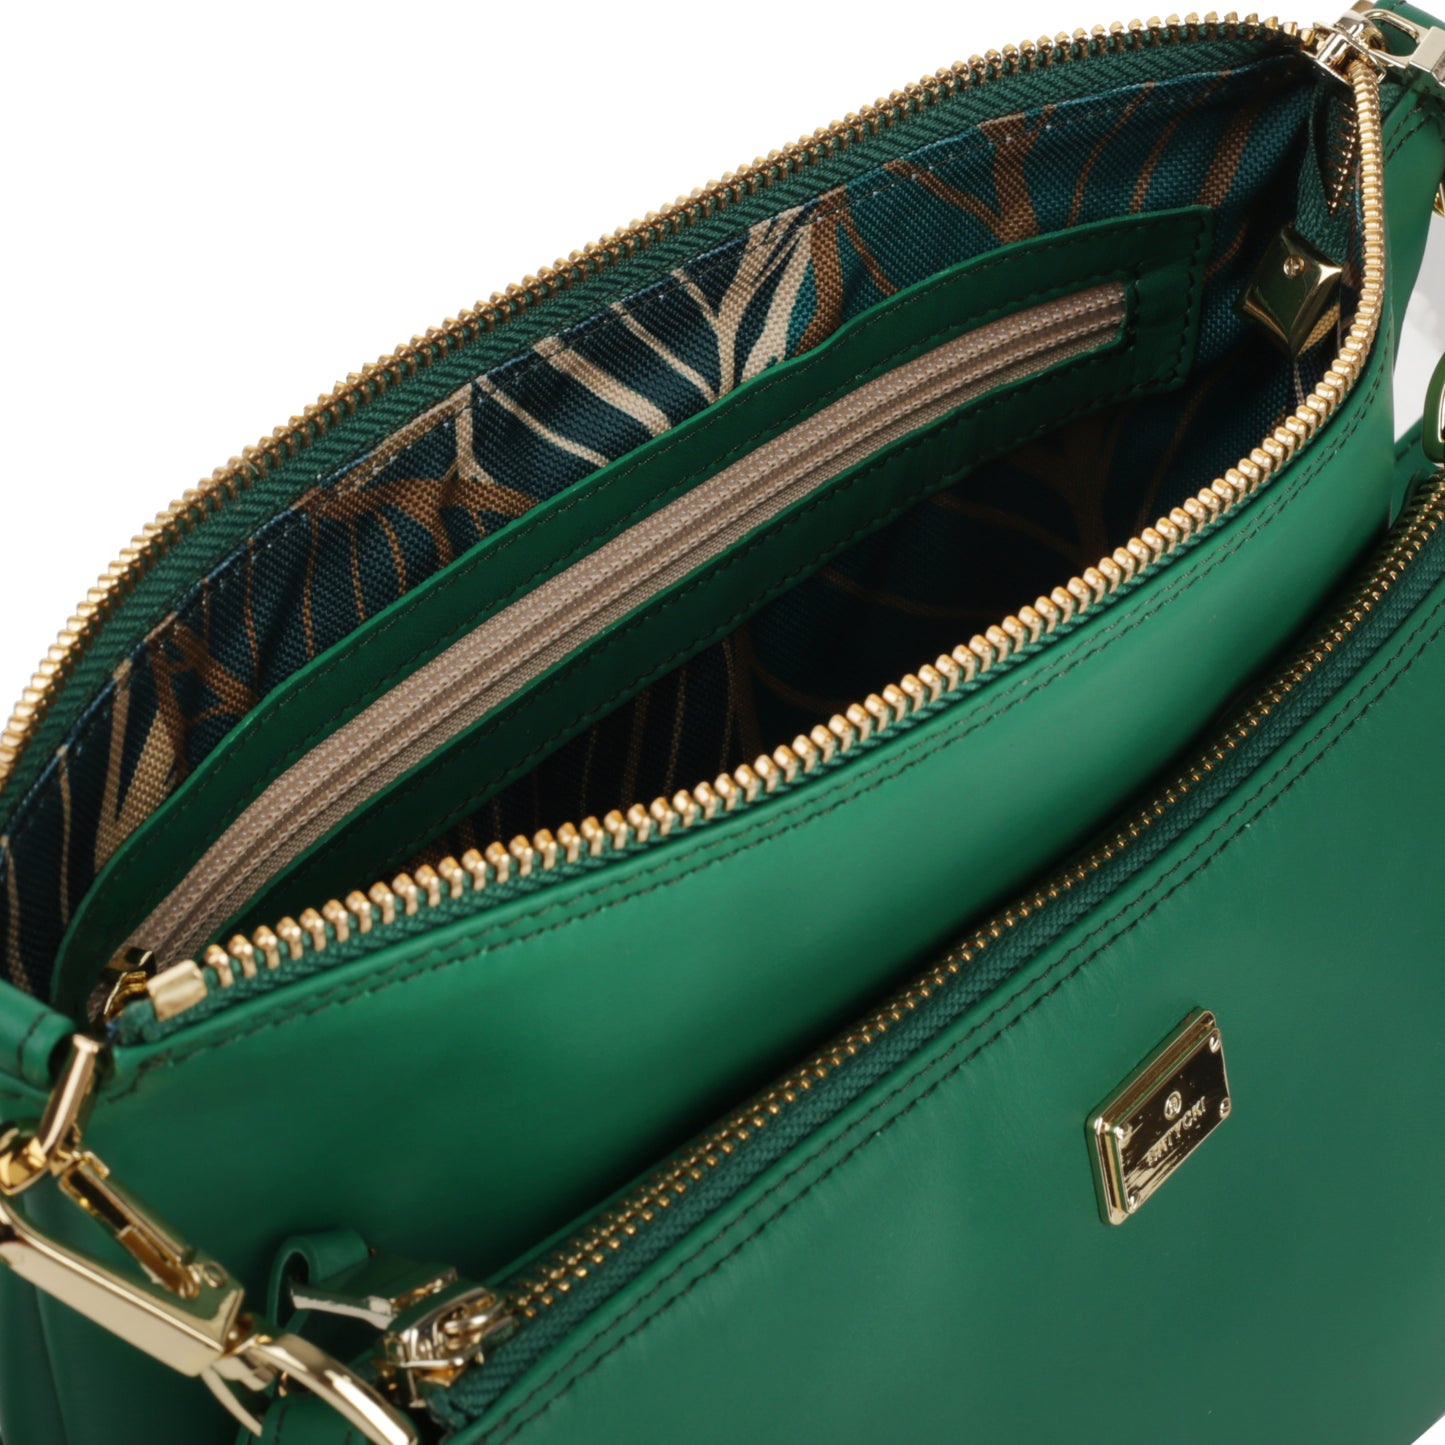 COSMO NAPA GREEN women's leather handbag